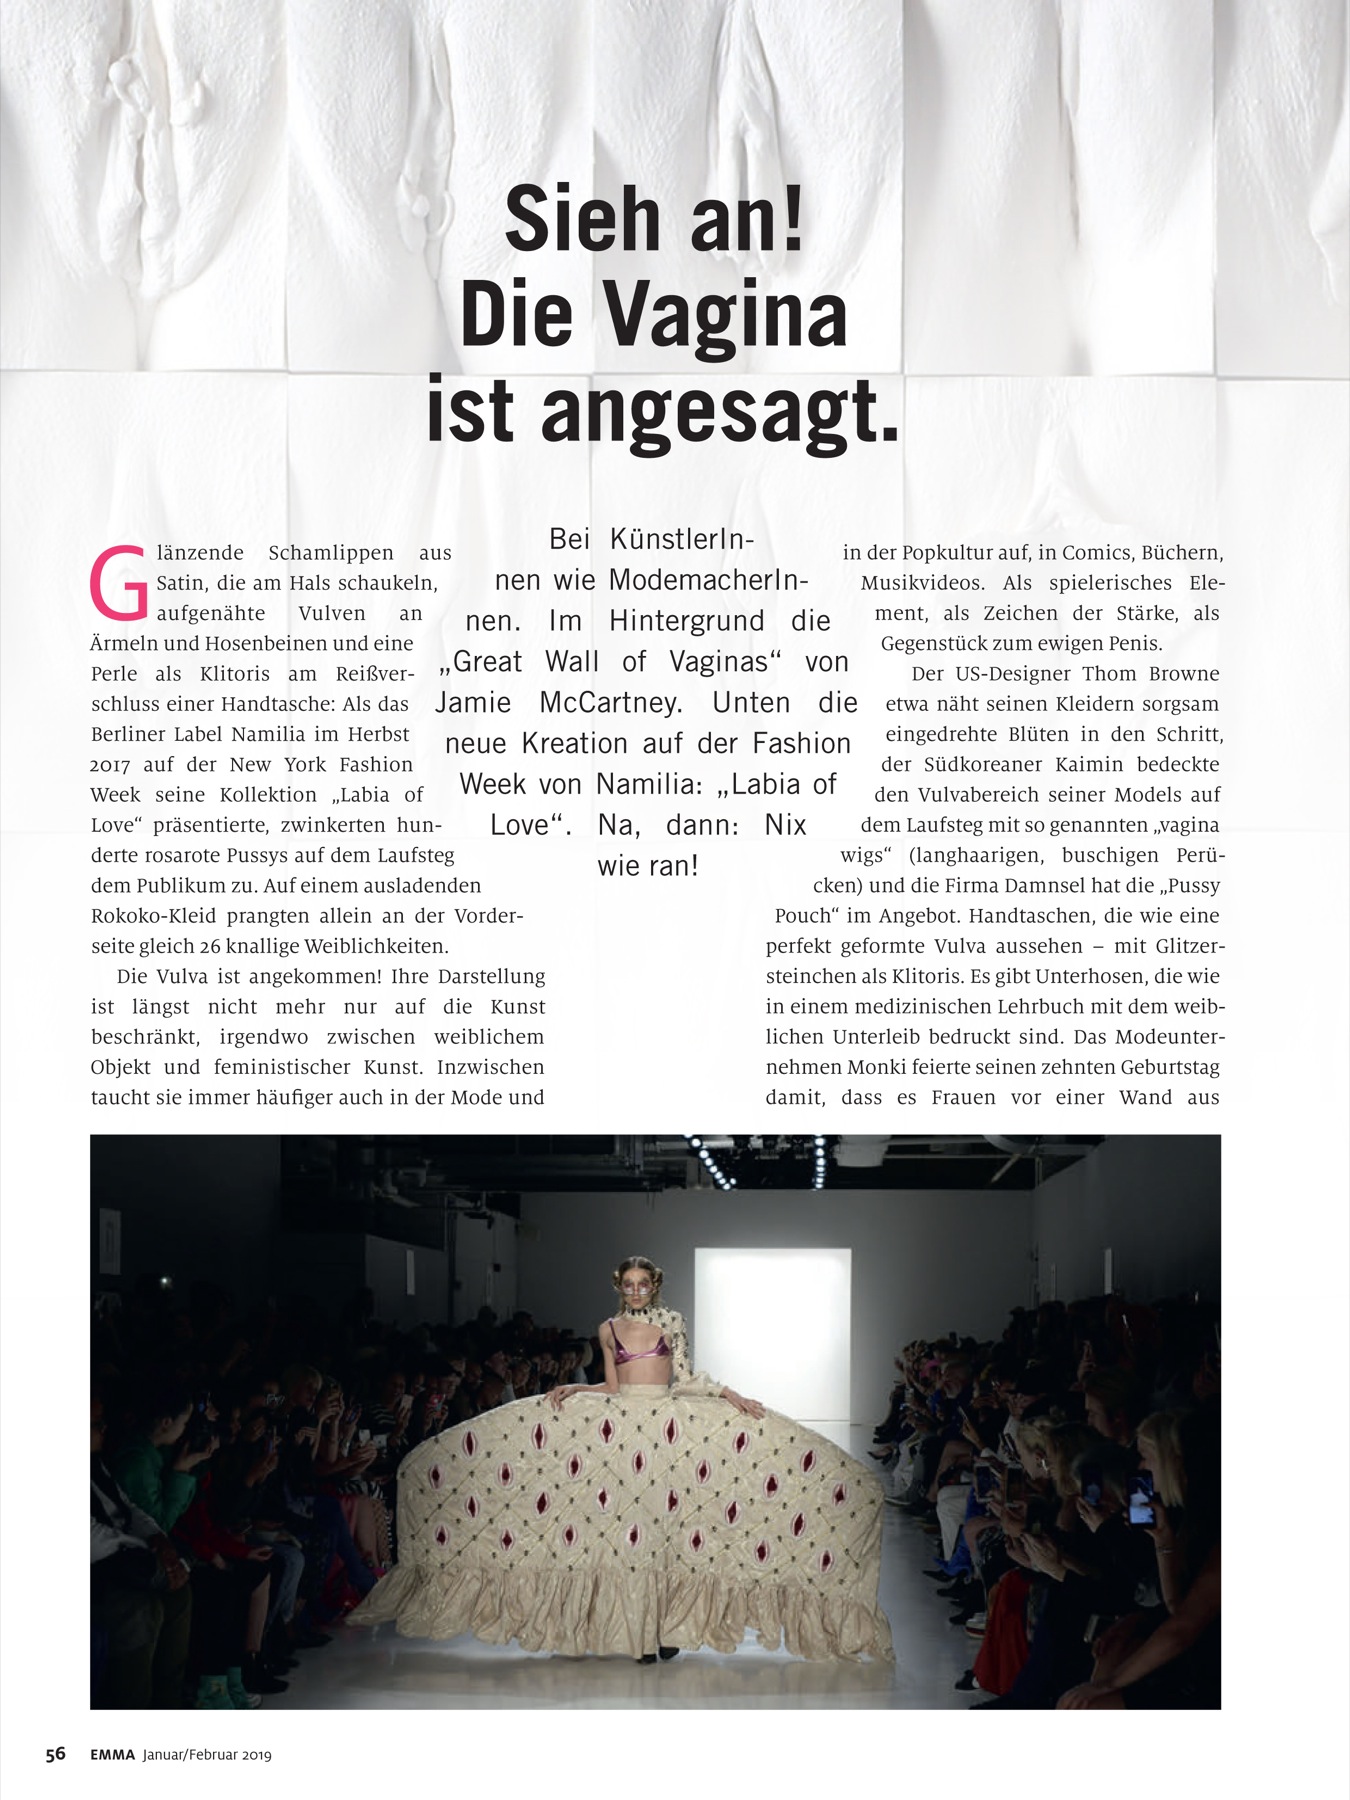 Emma Magazine article on vagina art